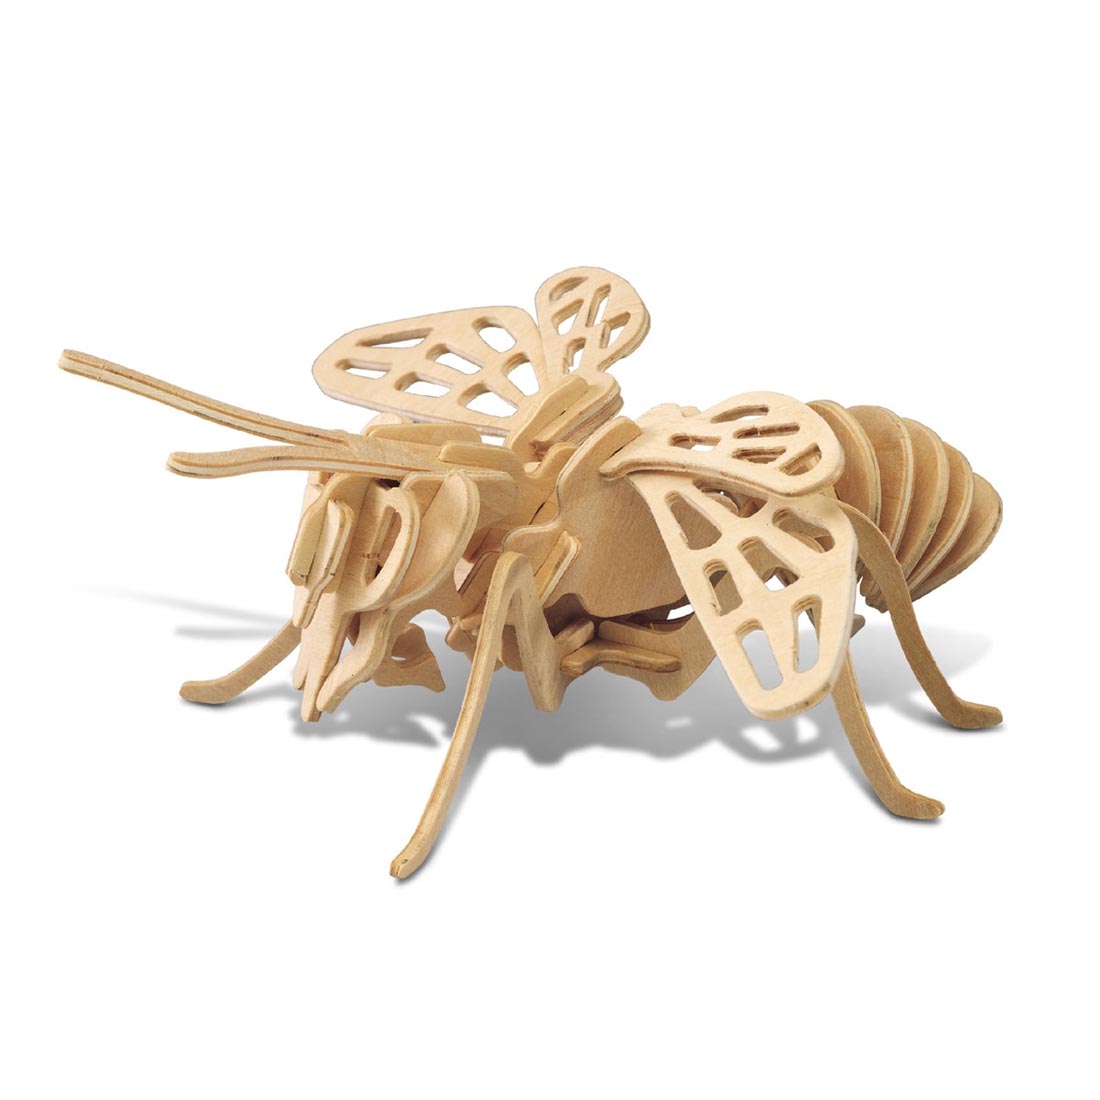 assembled Honeybee 3D Wooden Puzzle